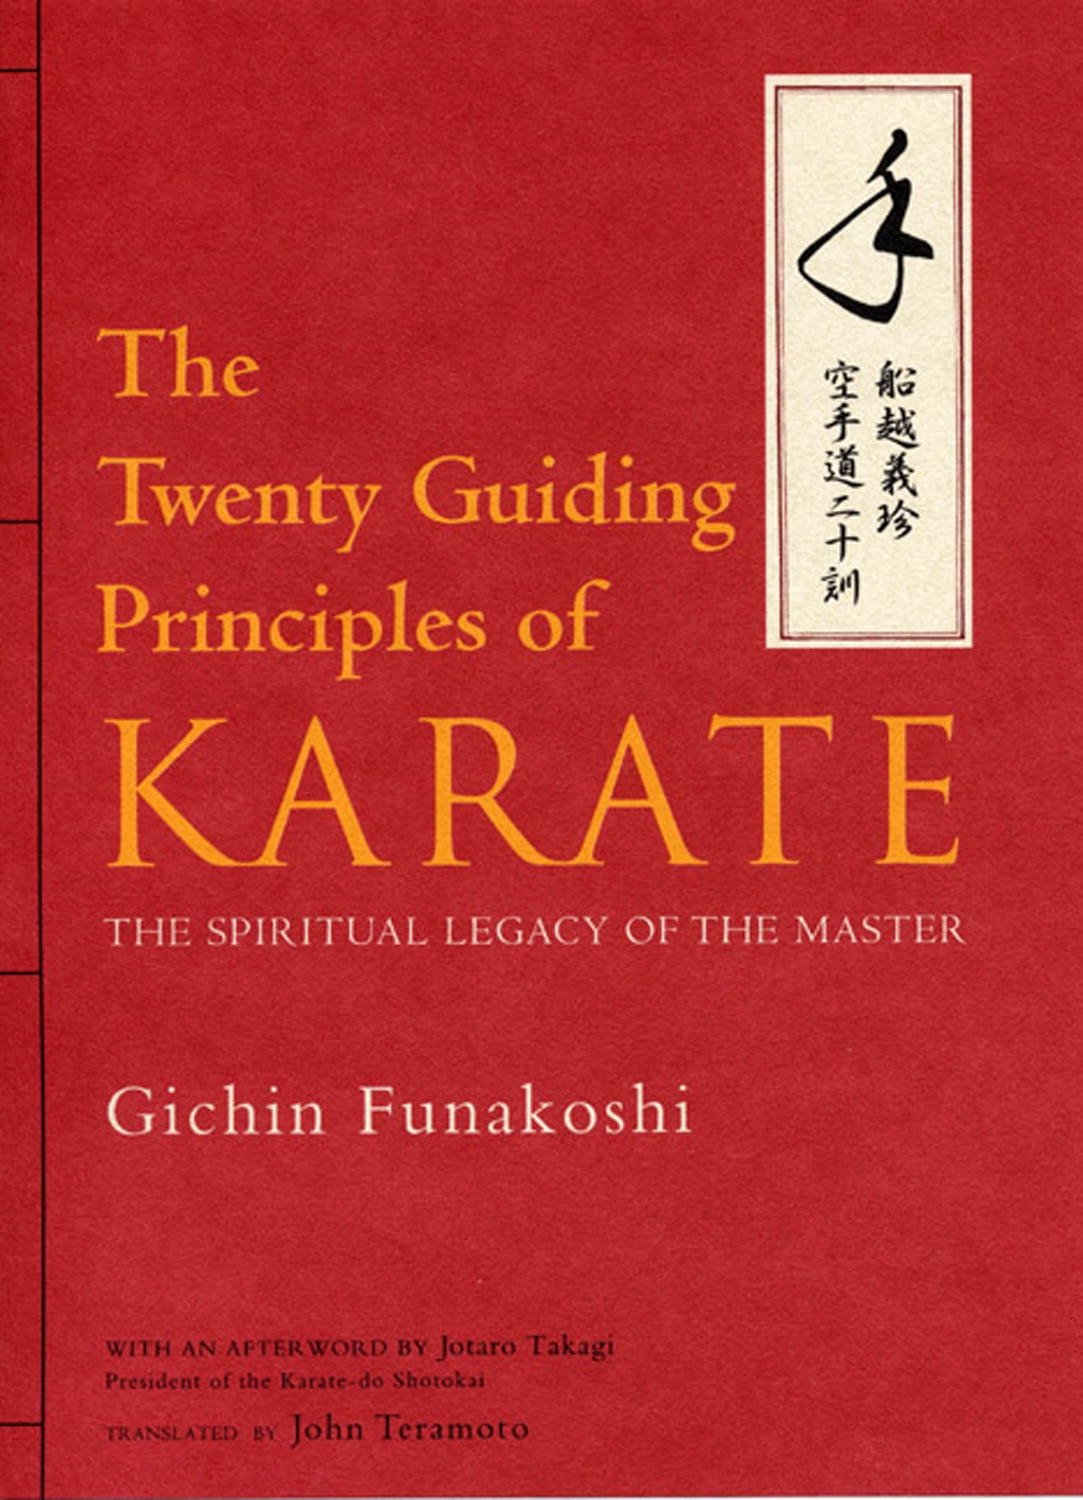 The Twenty Guiding Principles of Karate: The Spiritual Legacy of the Master Book by Gichin Funakoshi - Budovideos